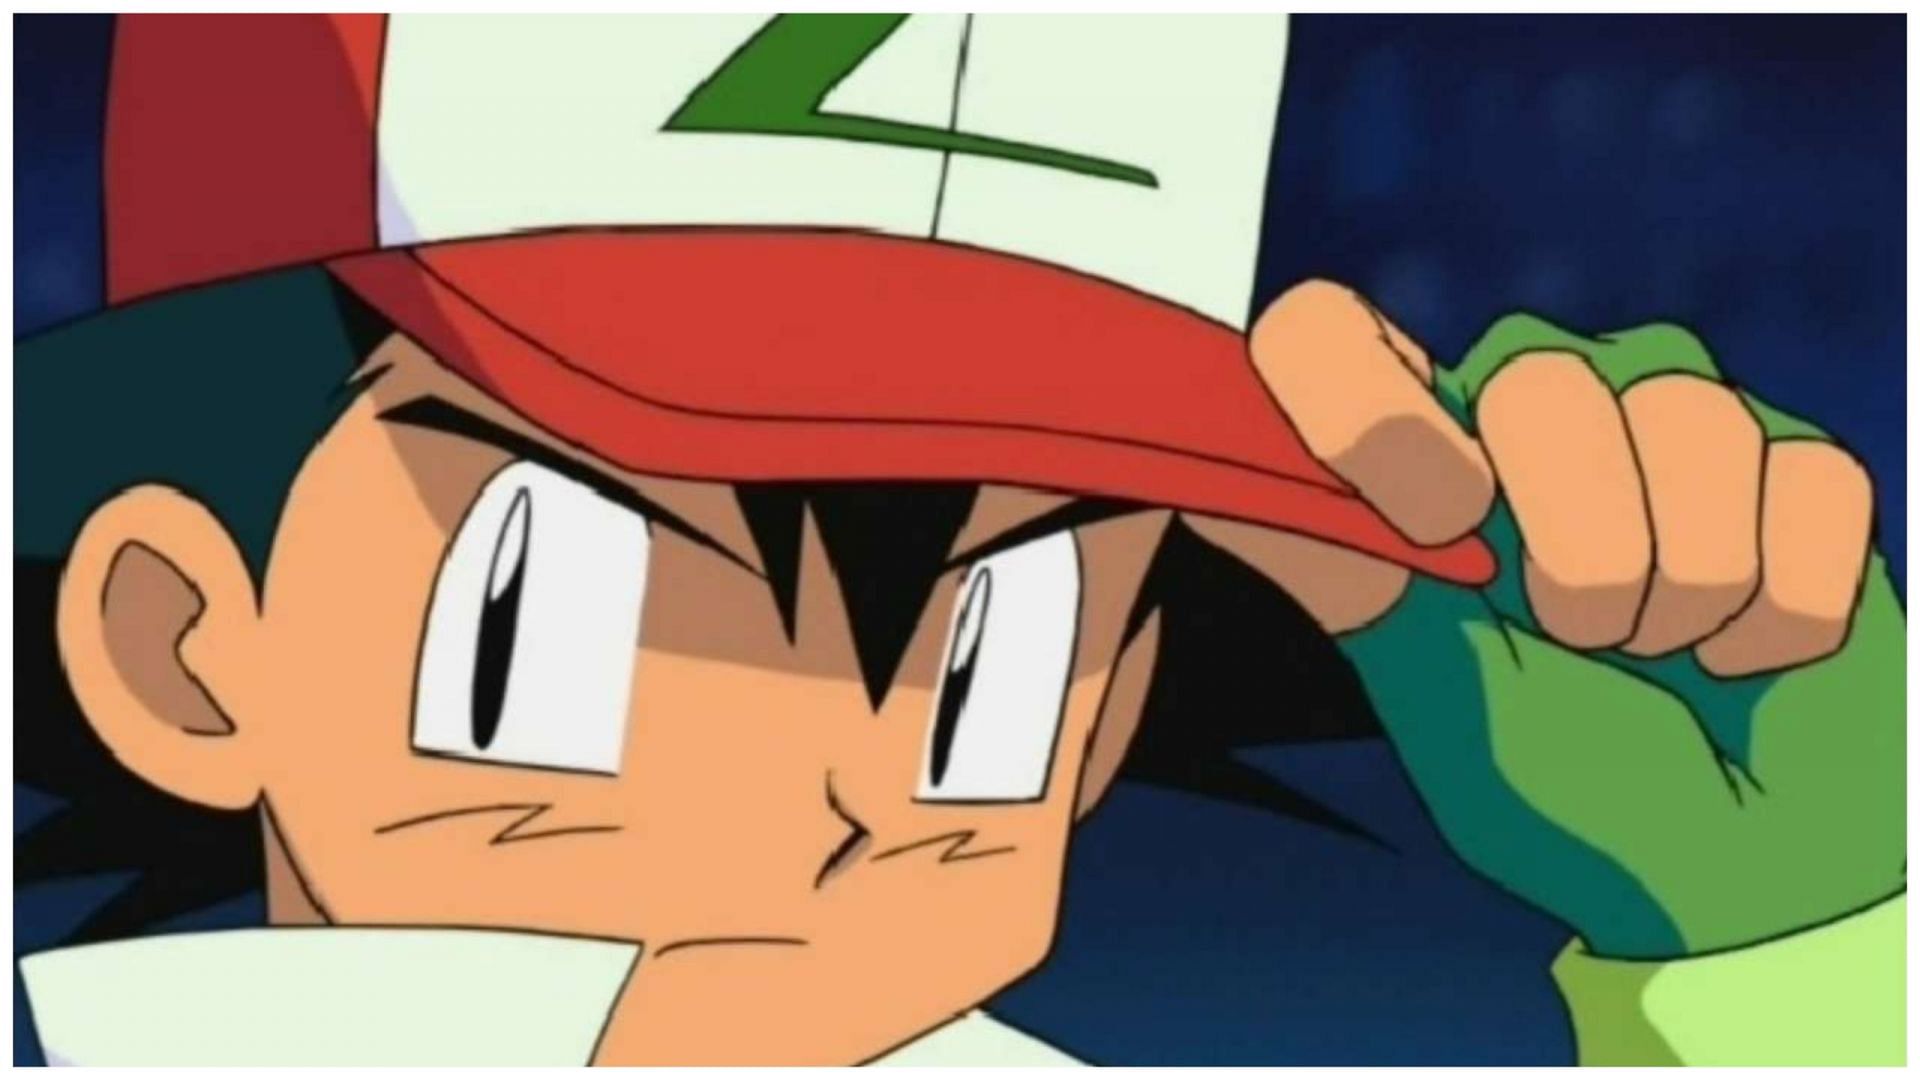 Ash Ketchum from the Pokemon series (Image via The Pok&eacute;mon Company)